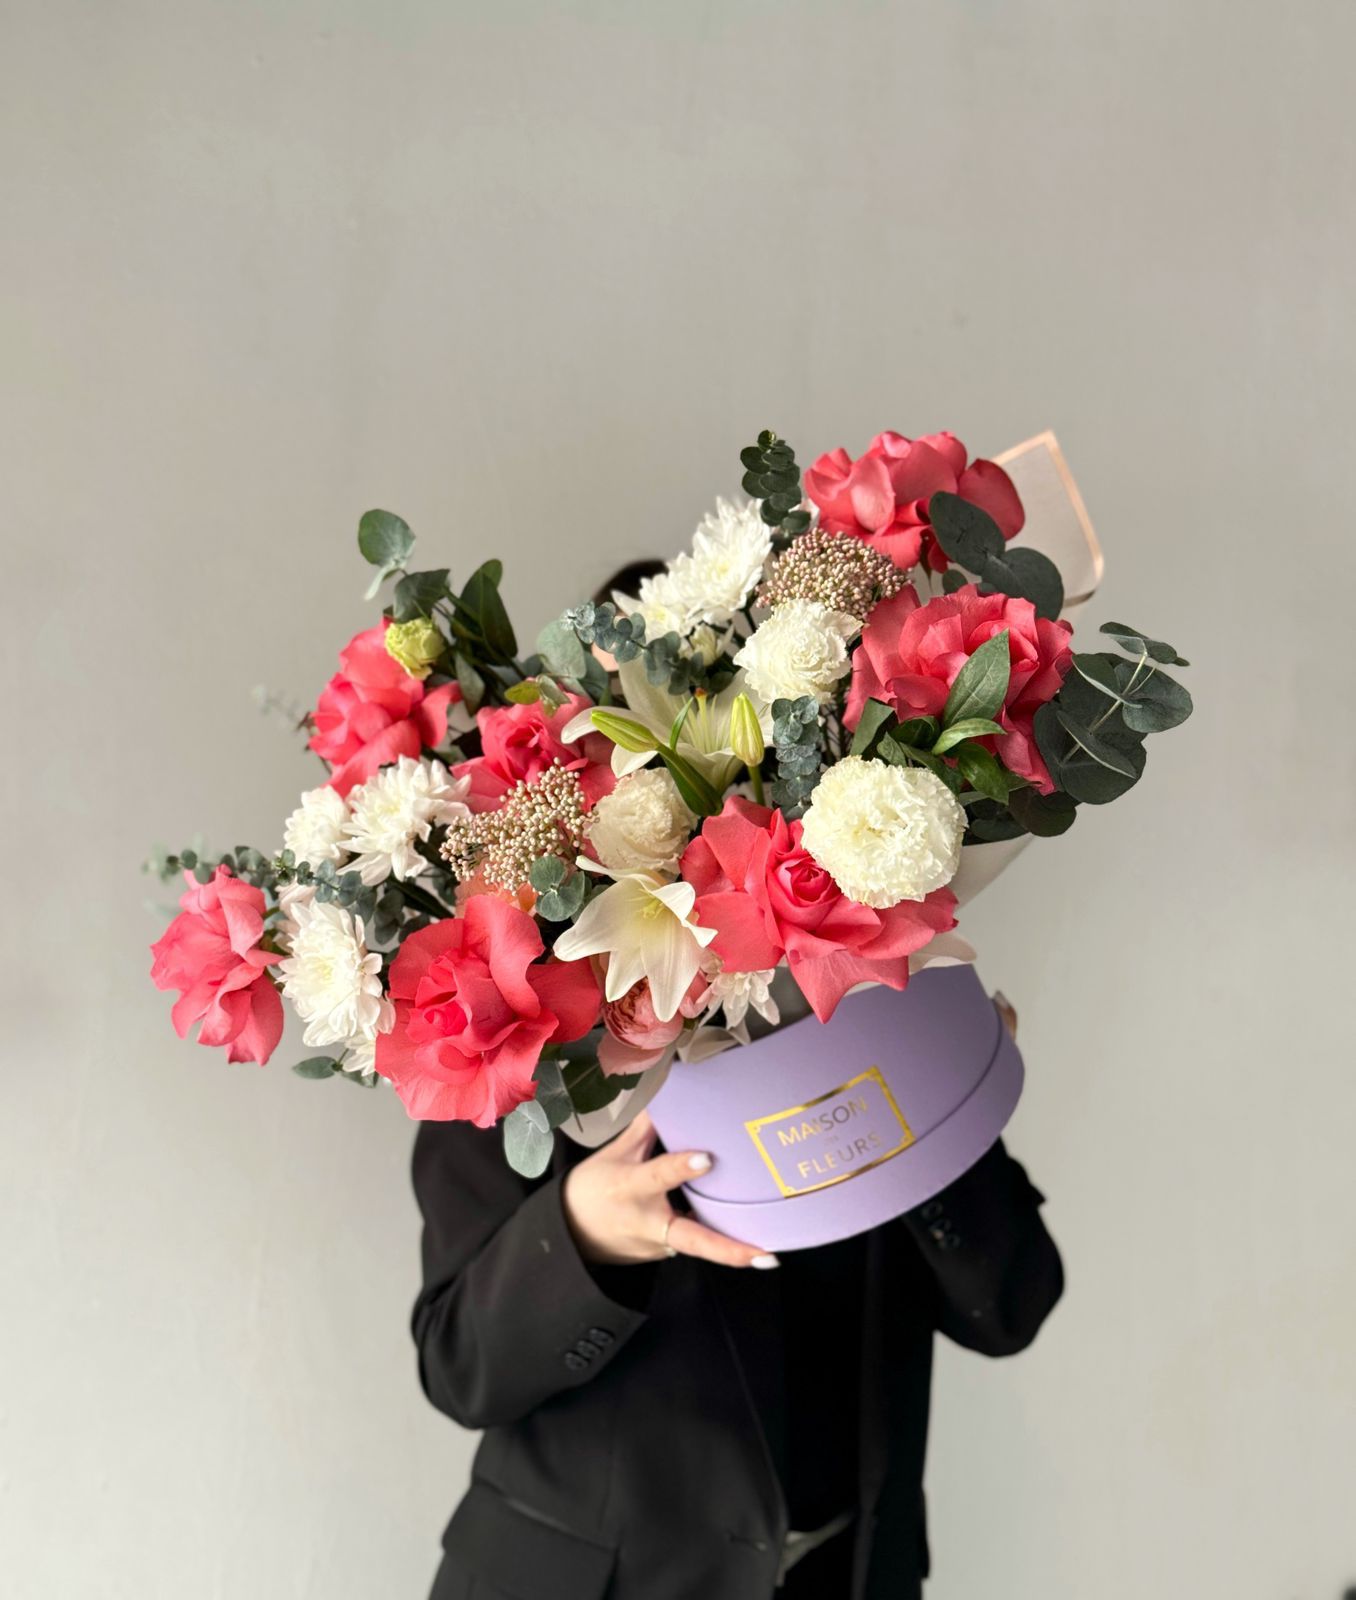 Композиция "Leonor" из роз, лилий, лизиантусов и хризантем